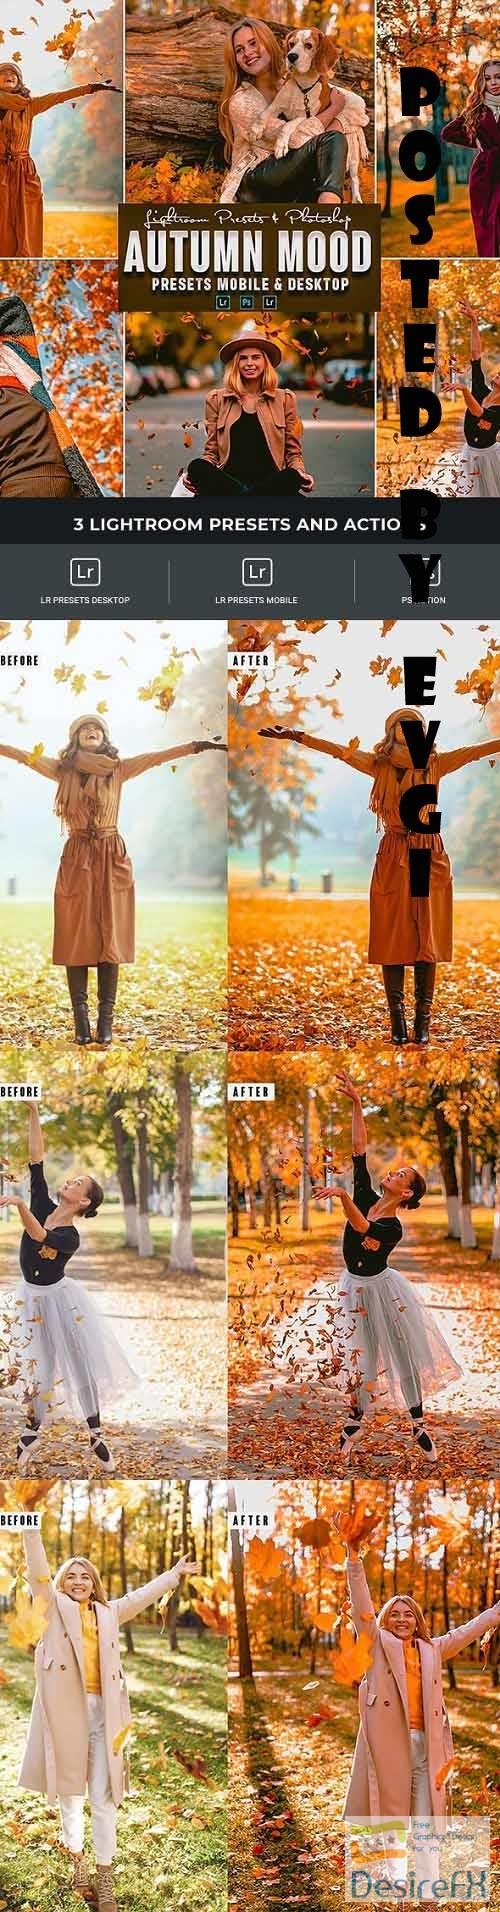 Autumn Photoshop Action &amp; Lightrom Presets - 34298026